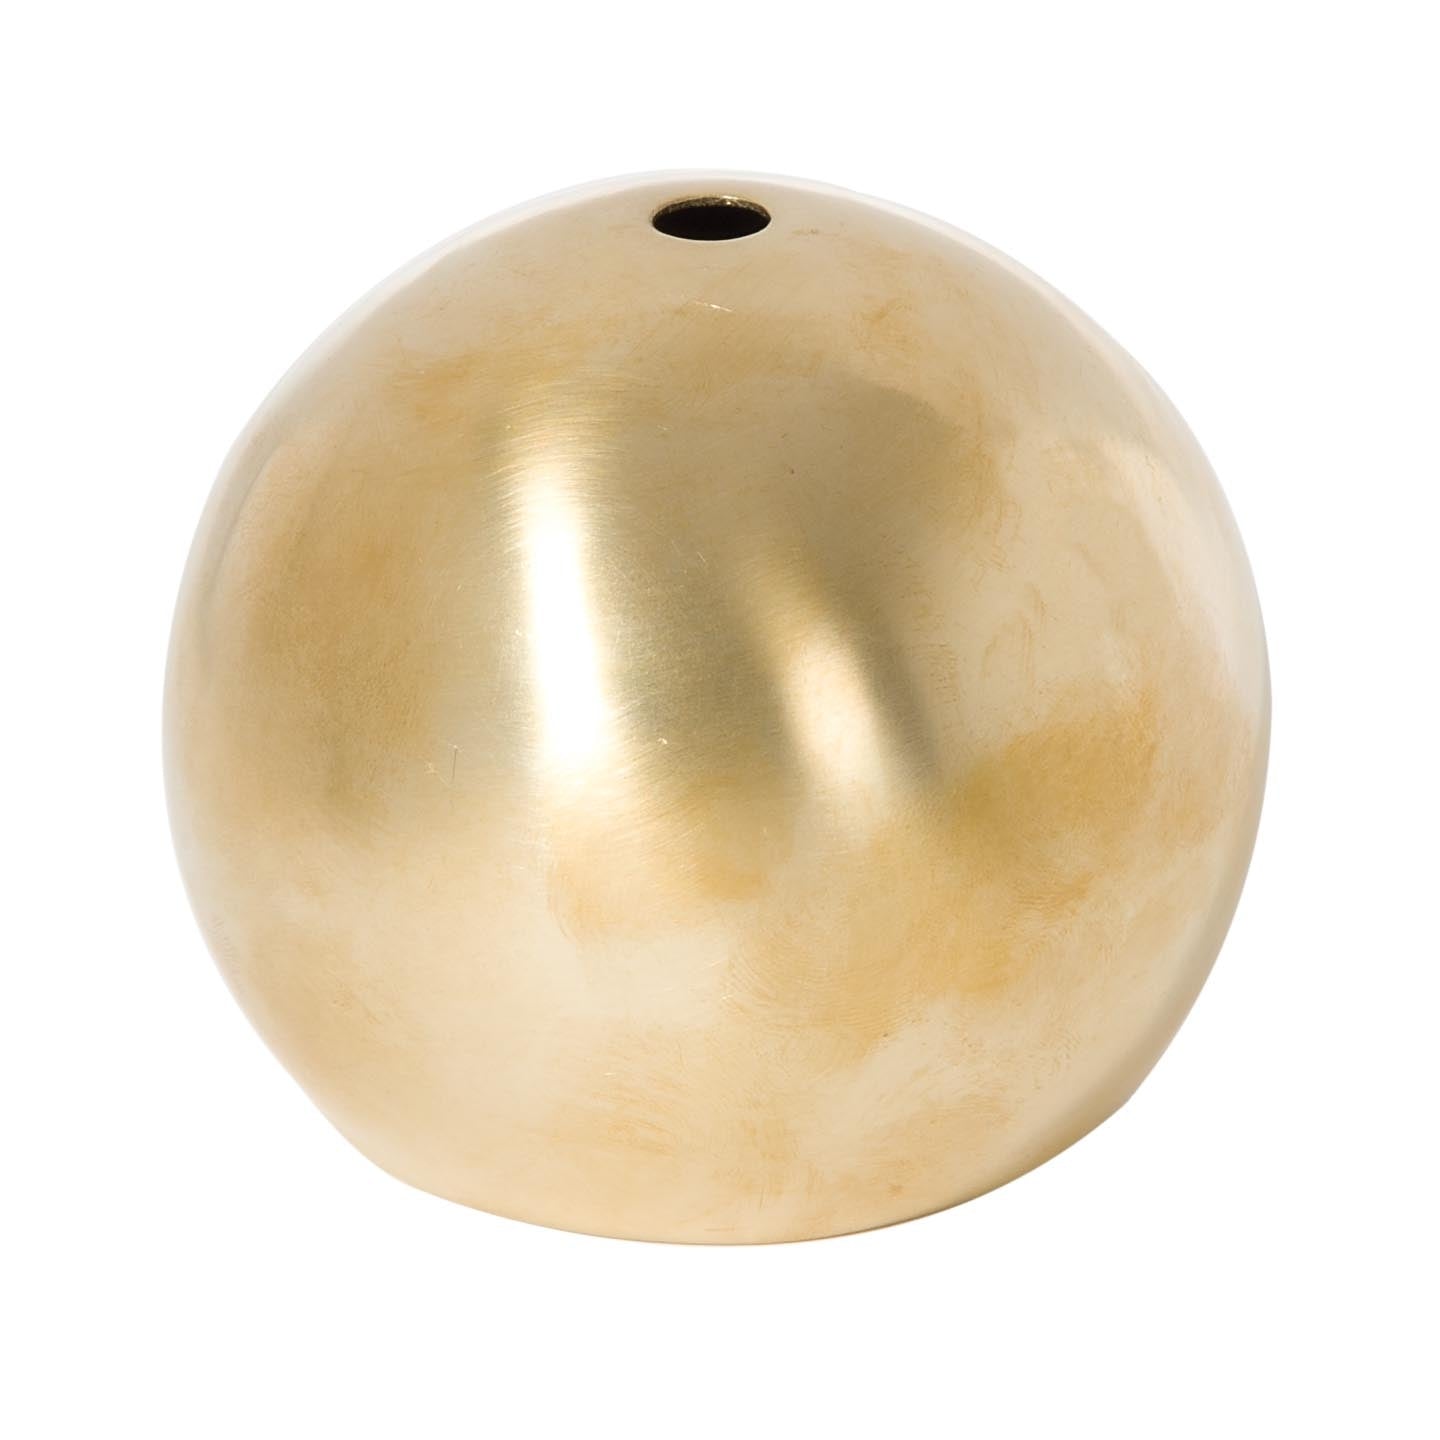 4 Inch Diameter Unfinished Satin Brass Eyeball-Shaped Metal Lamp Shade